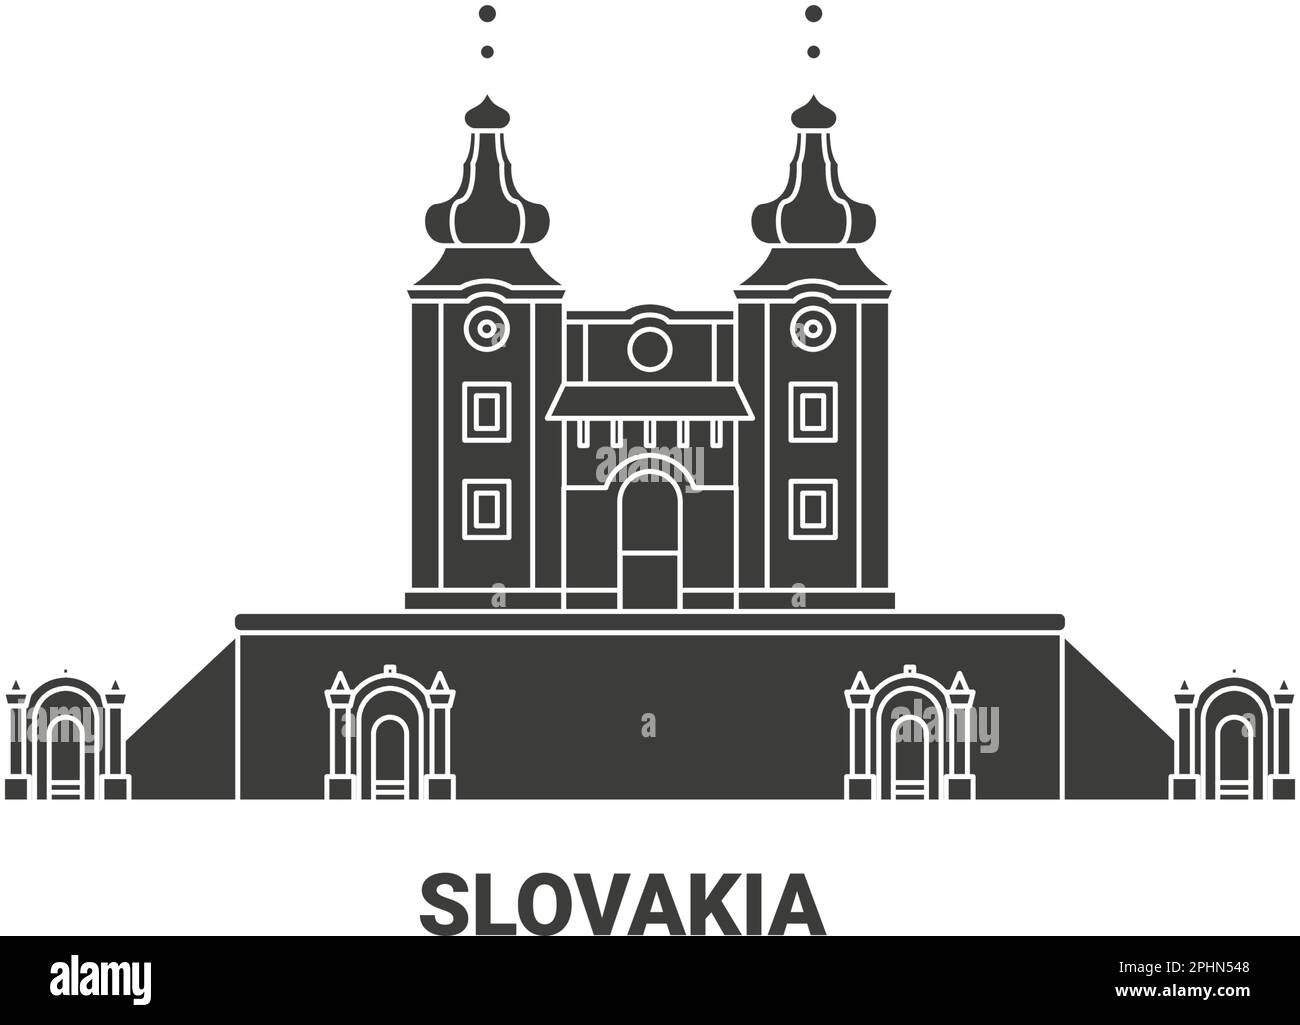 Slovakia, Landmark travel landmark vector illustration Stock Vector